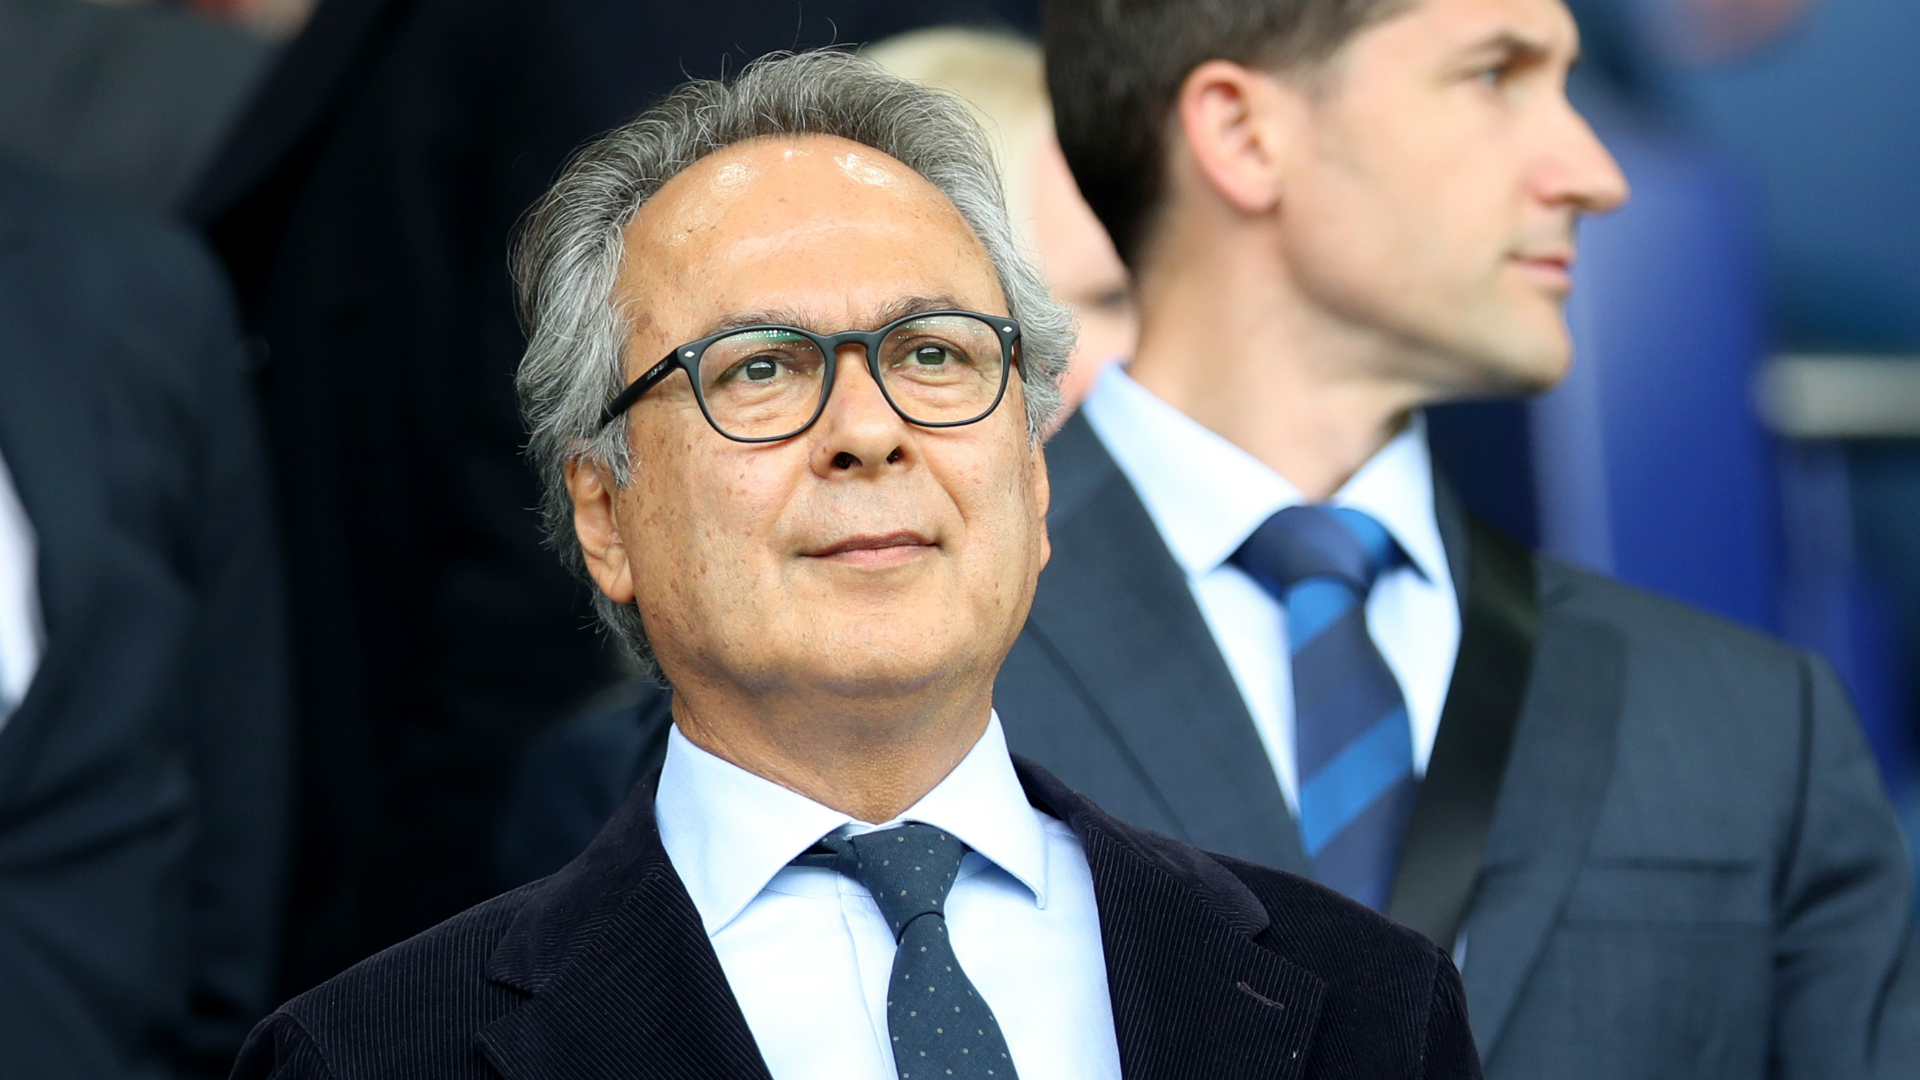 Moshiri becomes Everton's majority shareholder